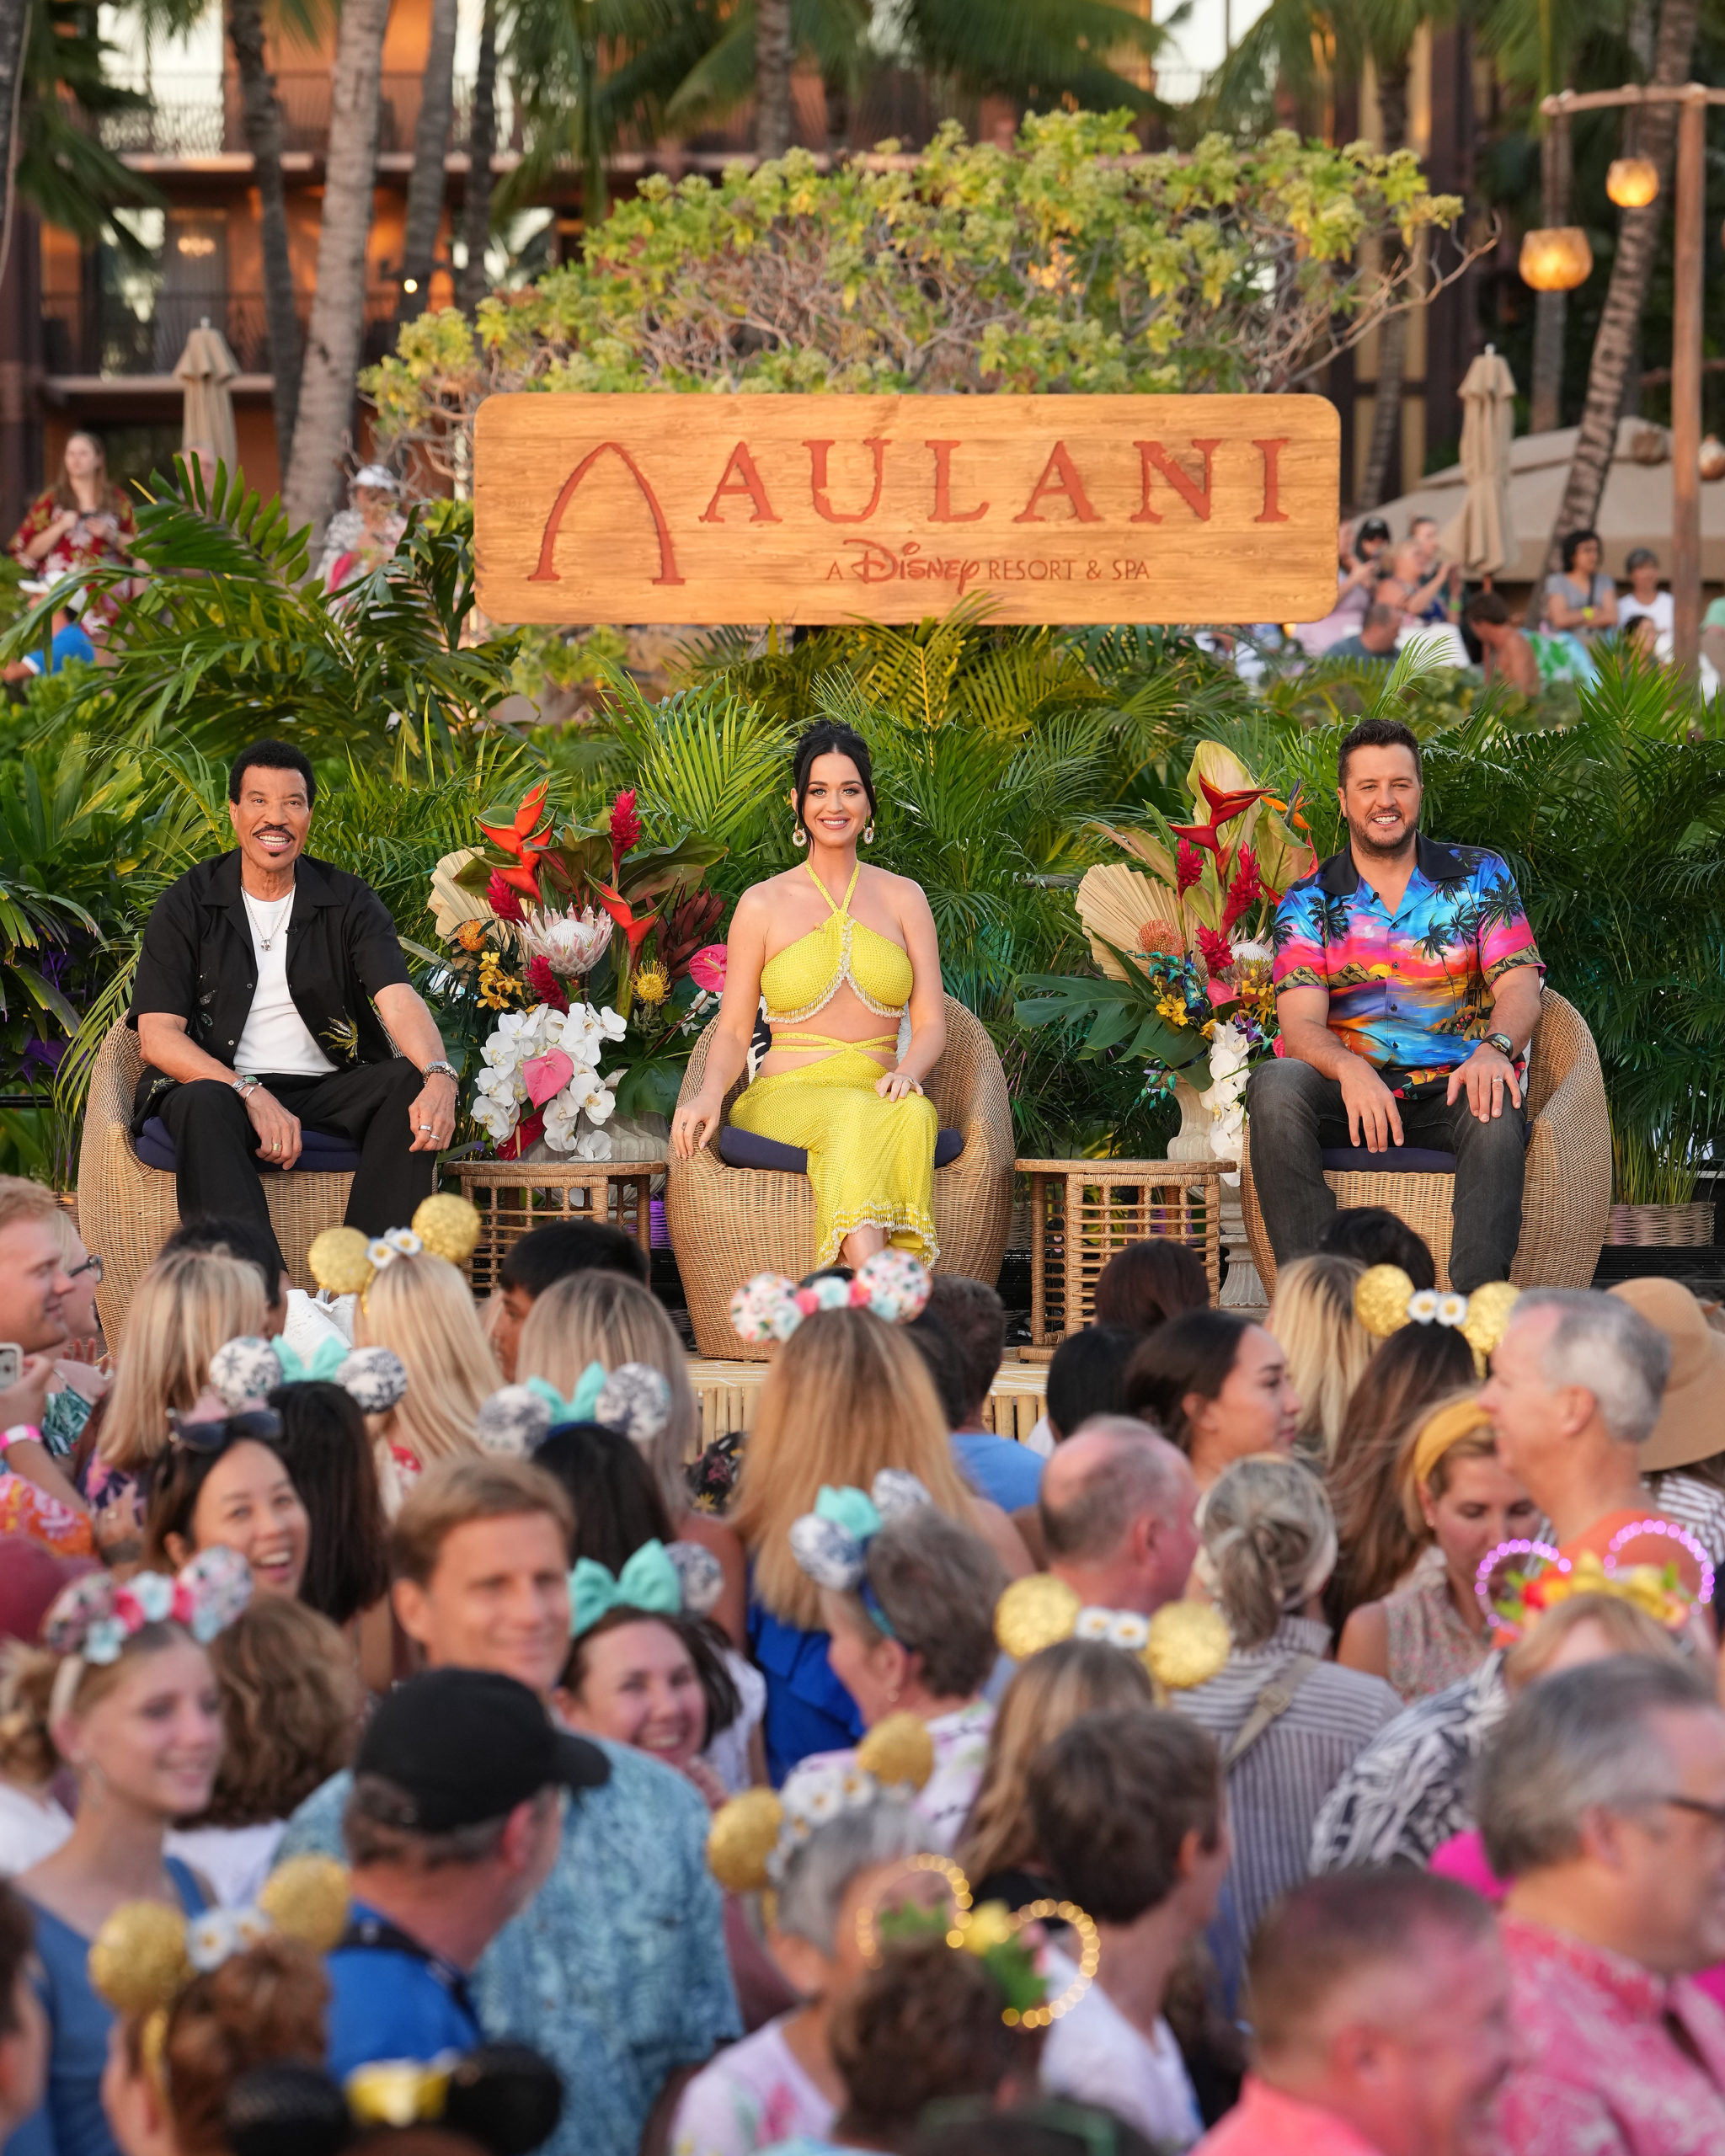 American Idol Returns To Aulani, a Disney Resort & Spa